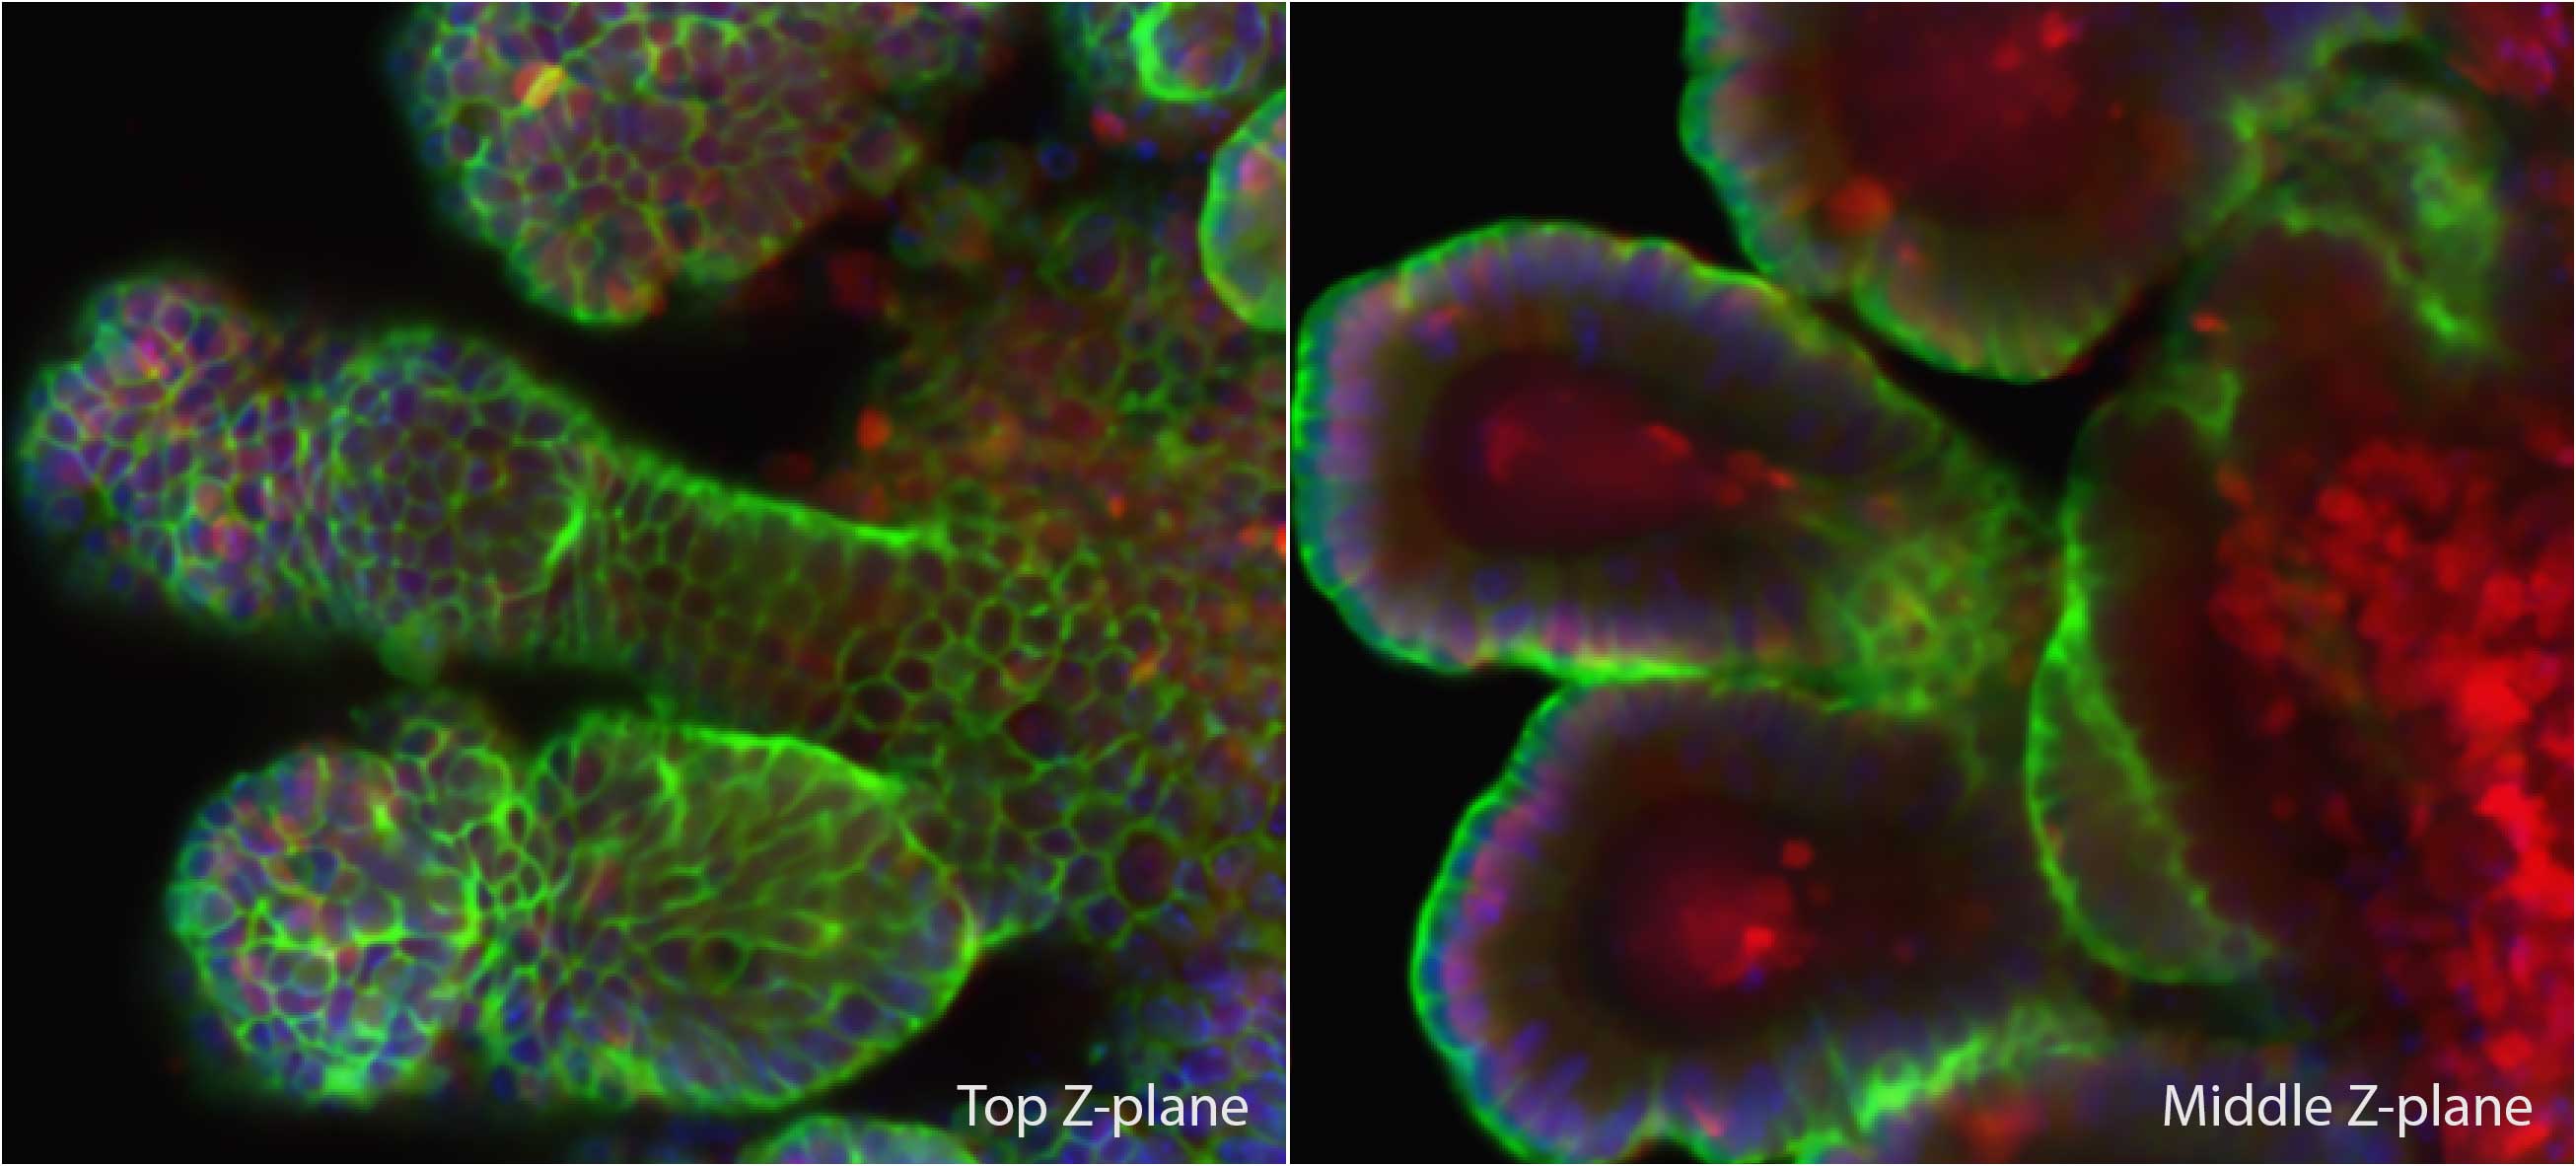 organoid imaging using confocal mode on Lana